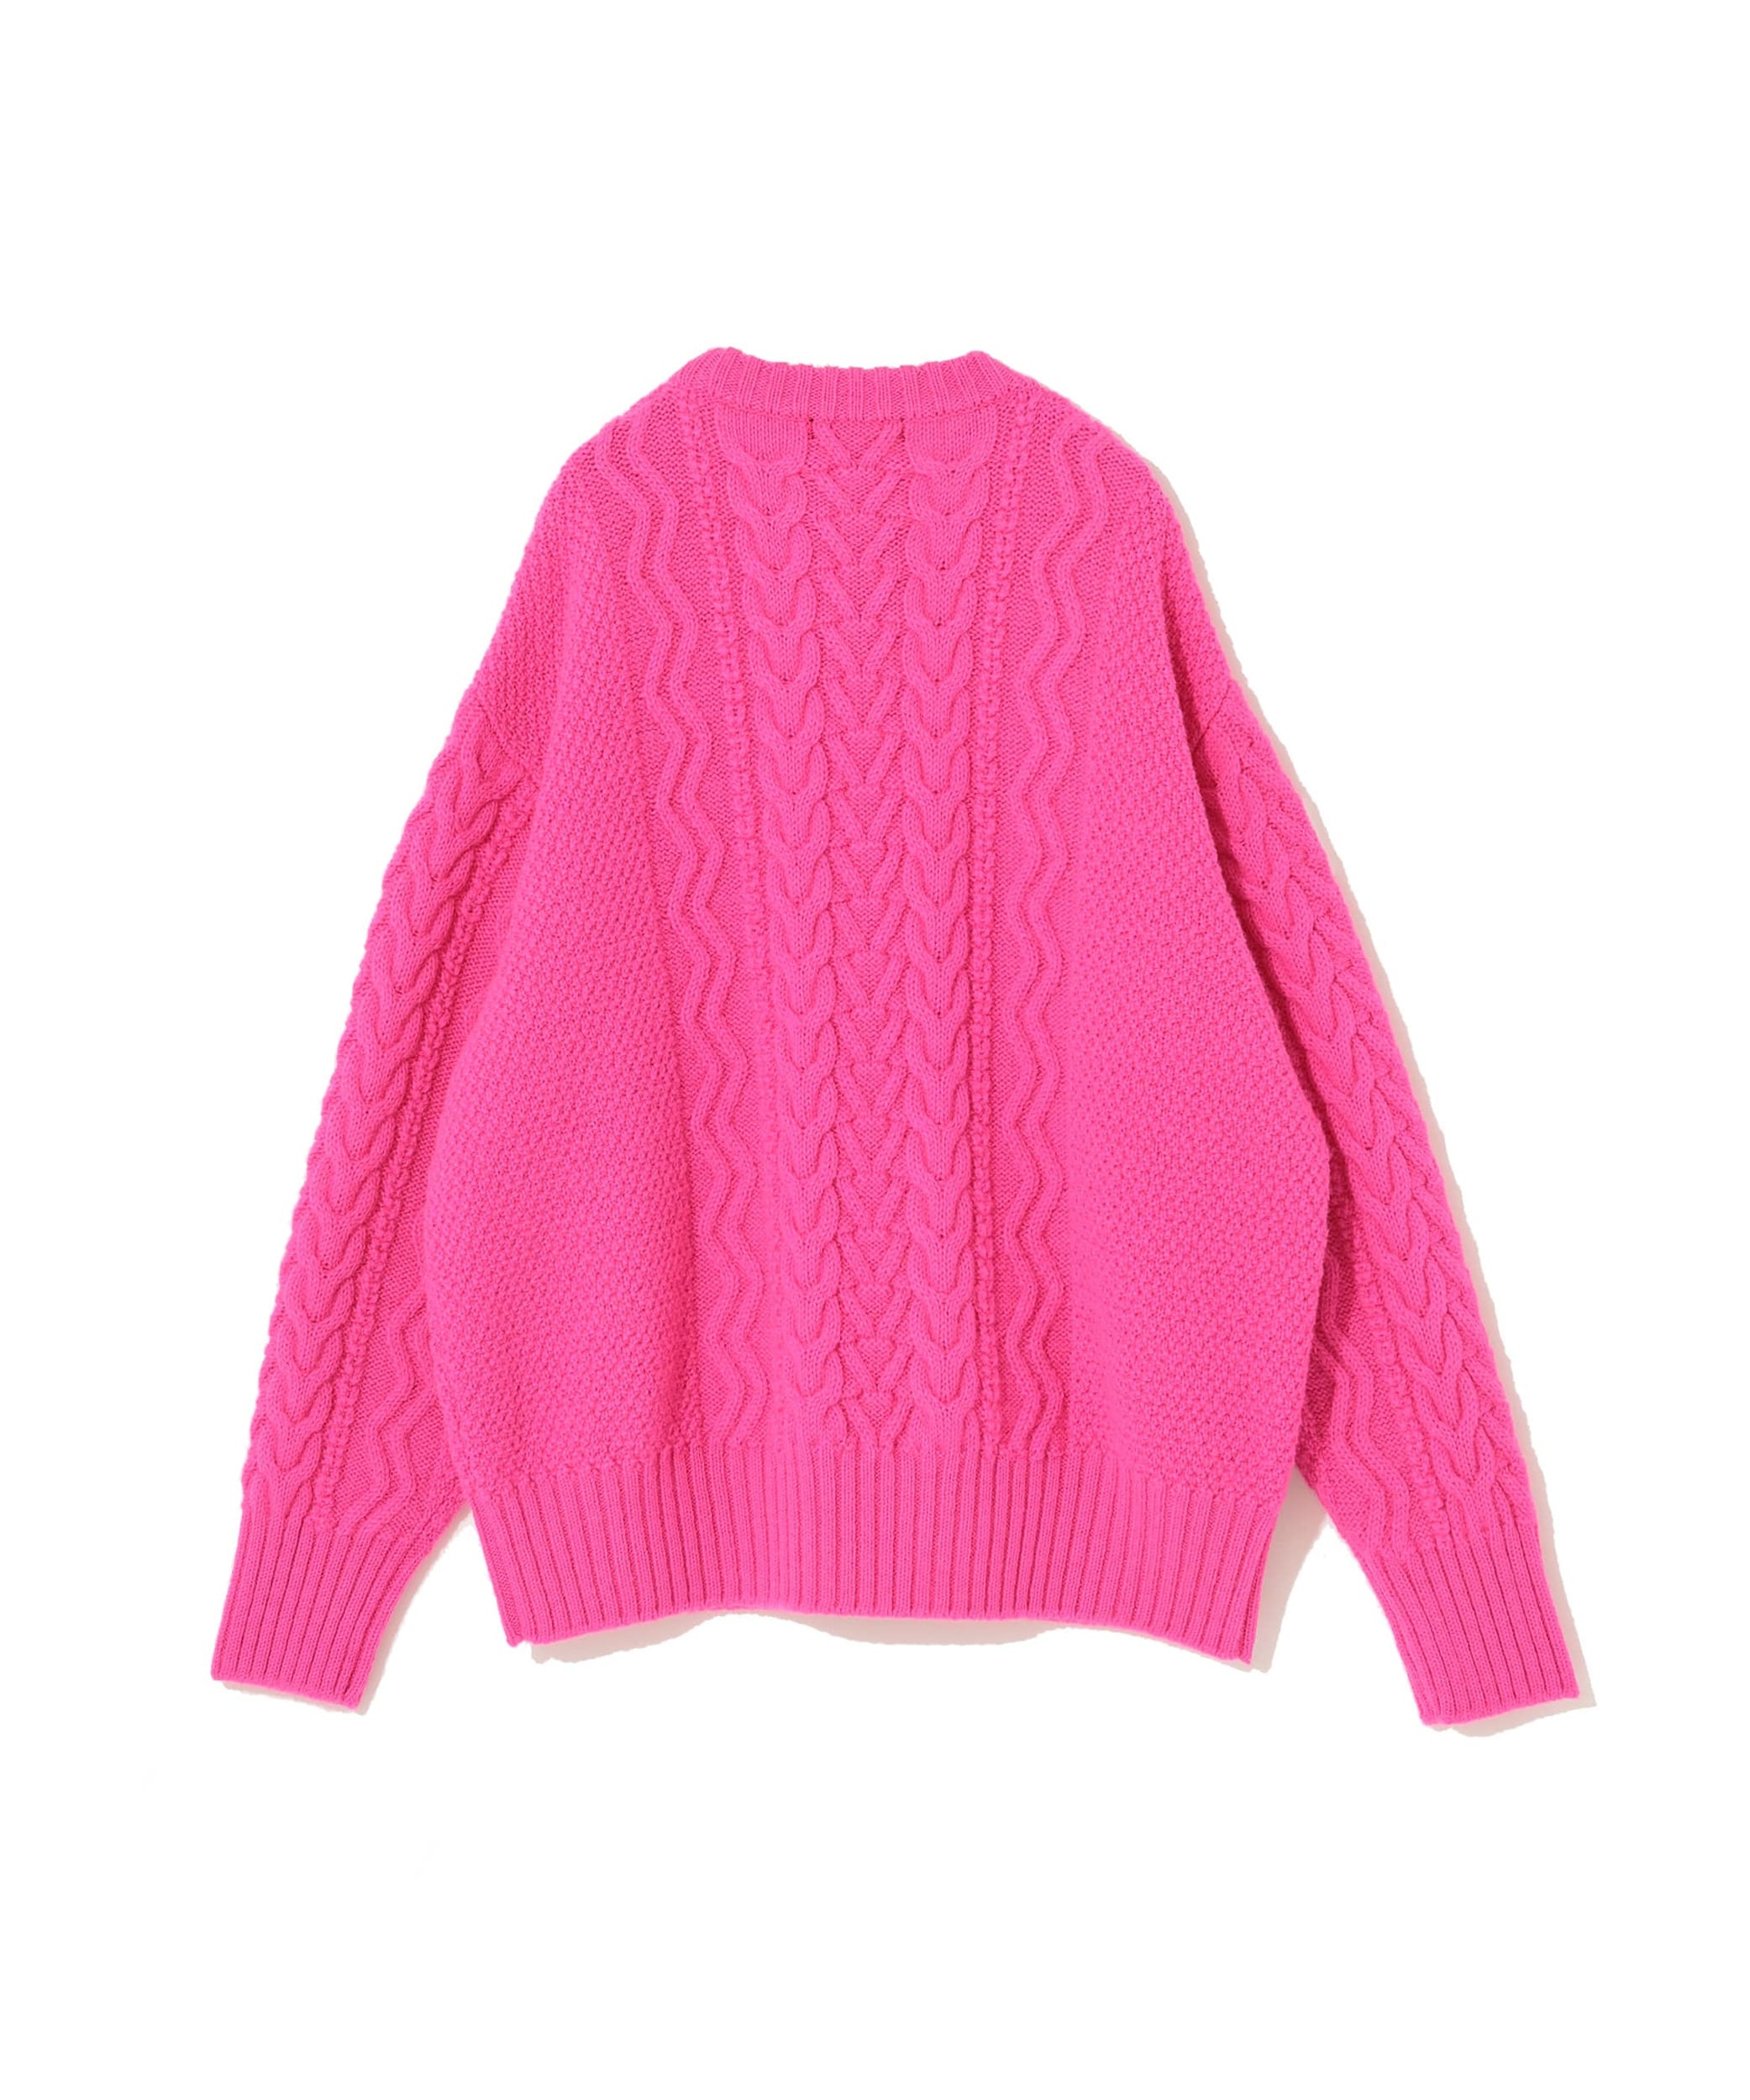 UC2B4901-2 Sweater - INVINCIBLE